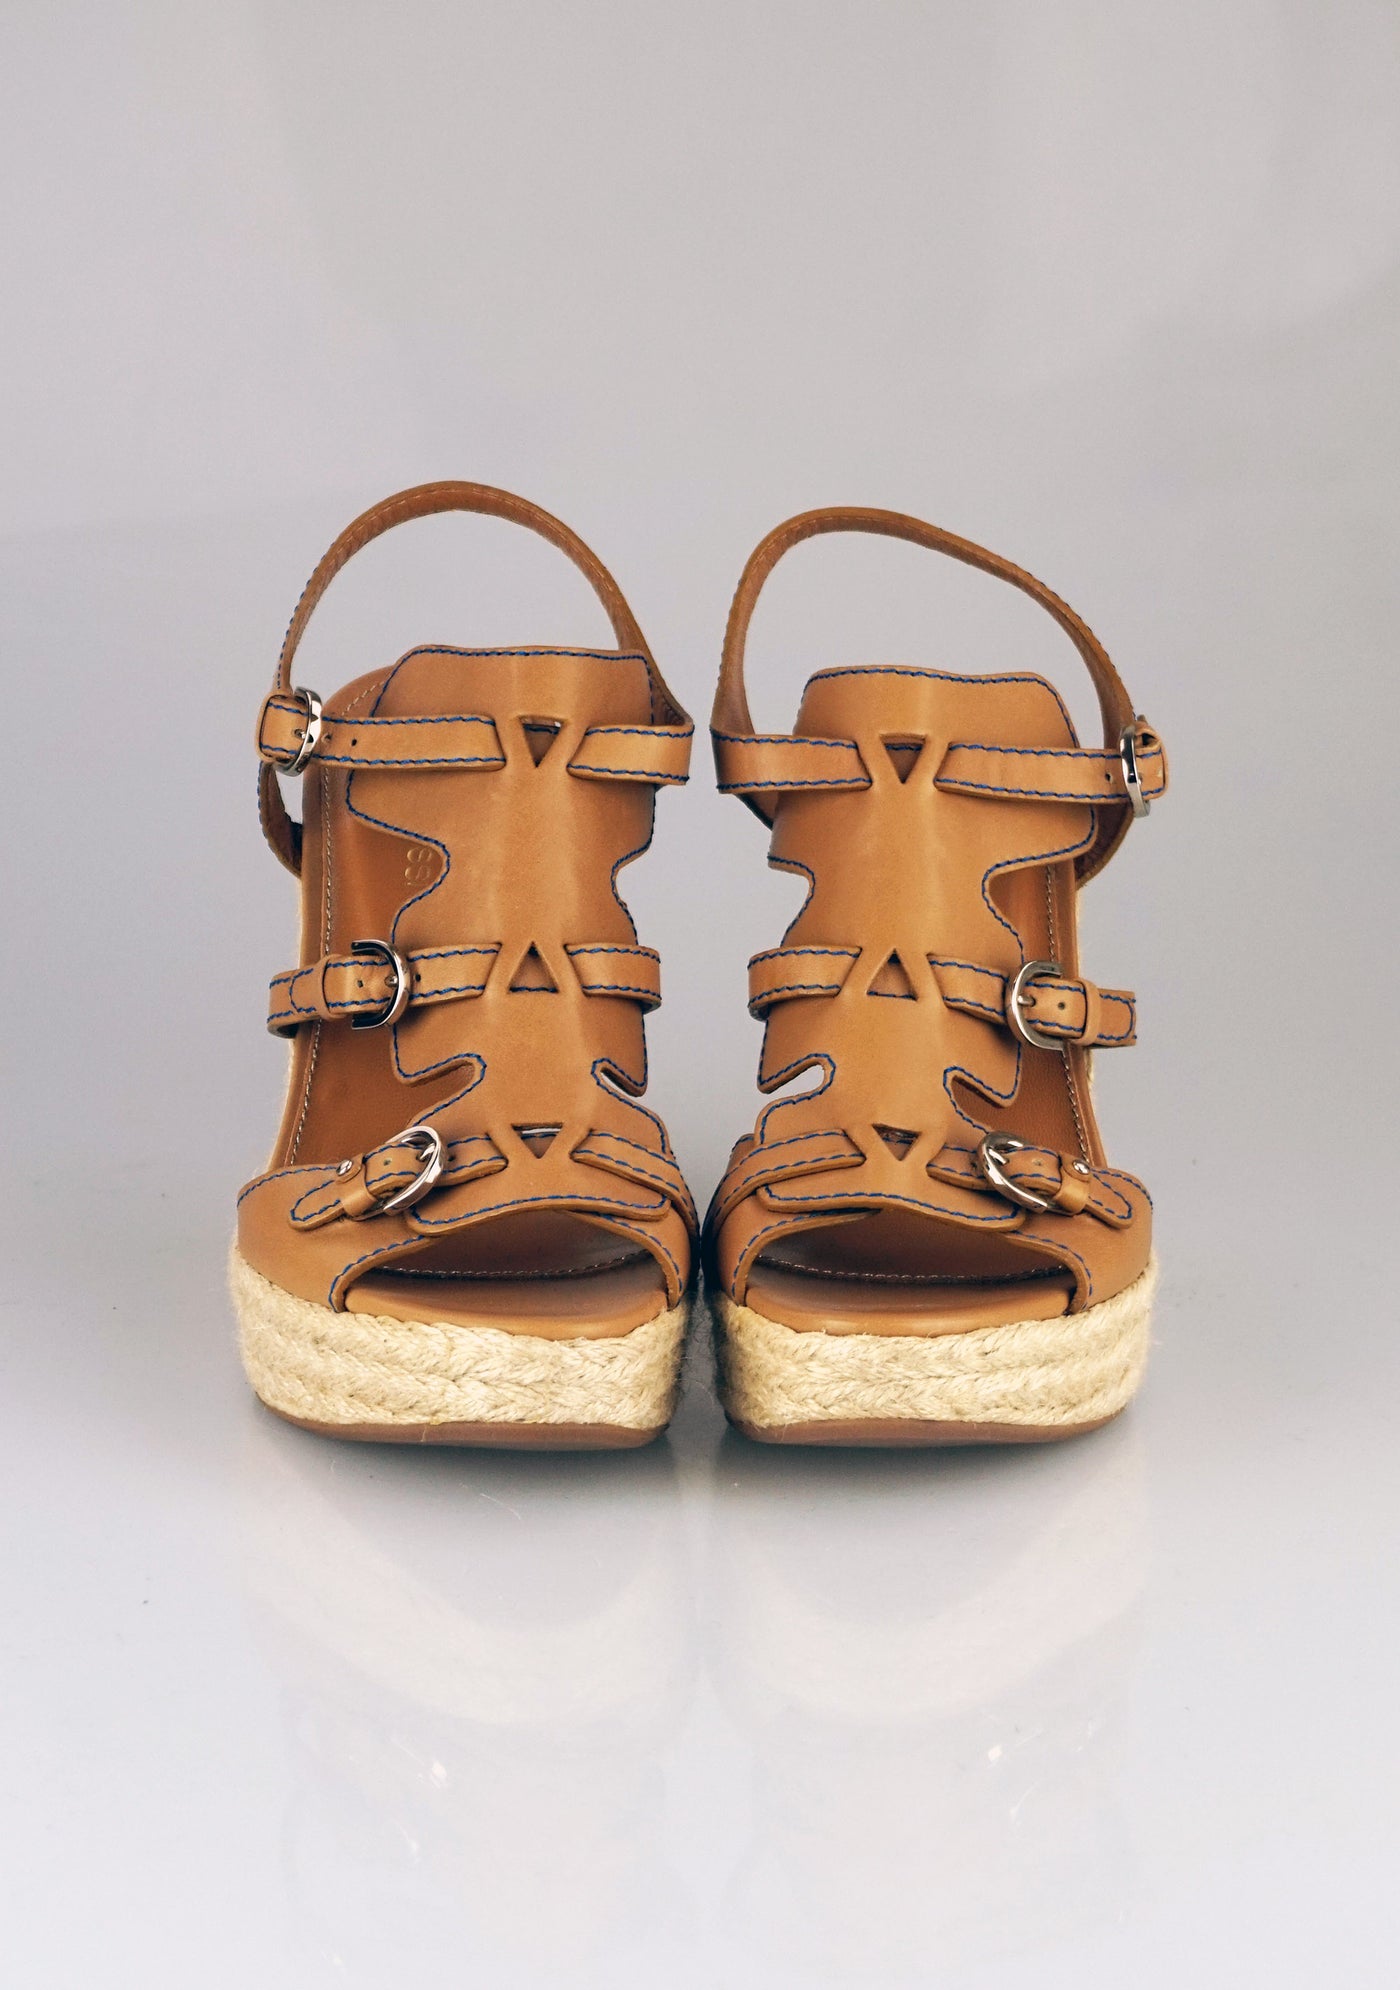 Wedges tan sandals